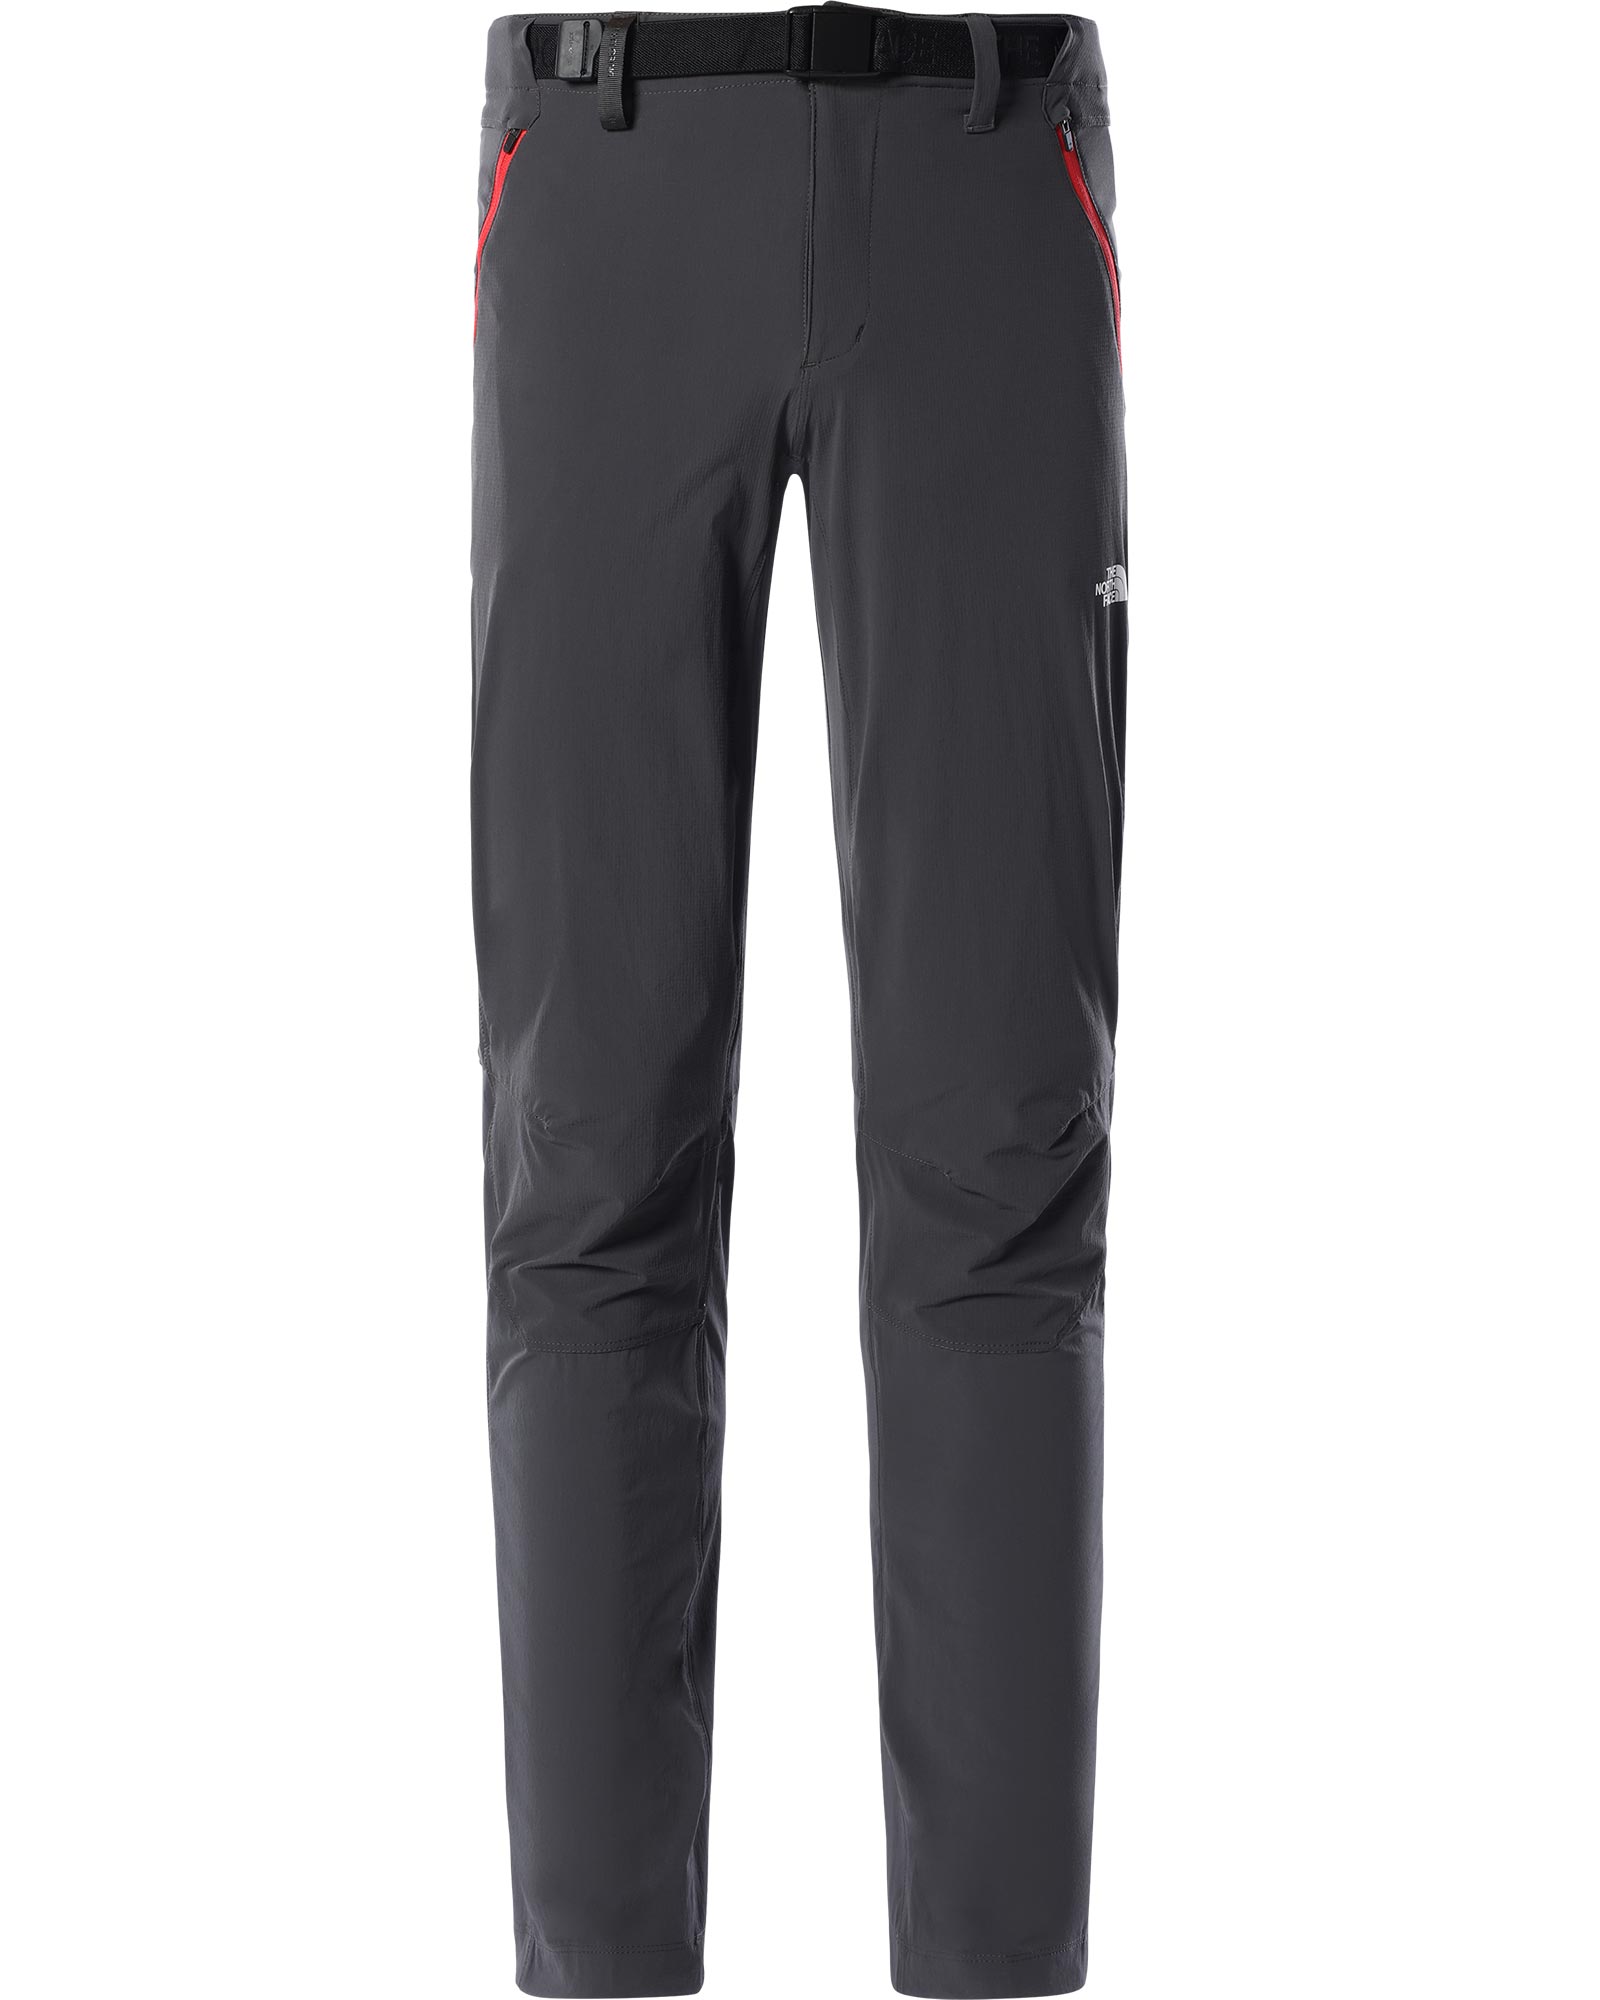 The North Face Speedlight 2 Women’s Pants - Asphalt Grey/Horizon Red 14